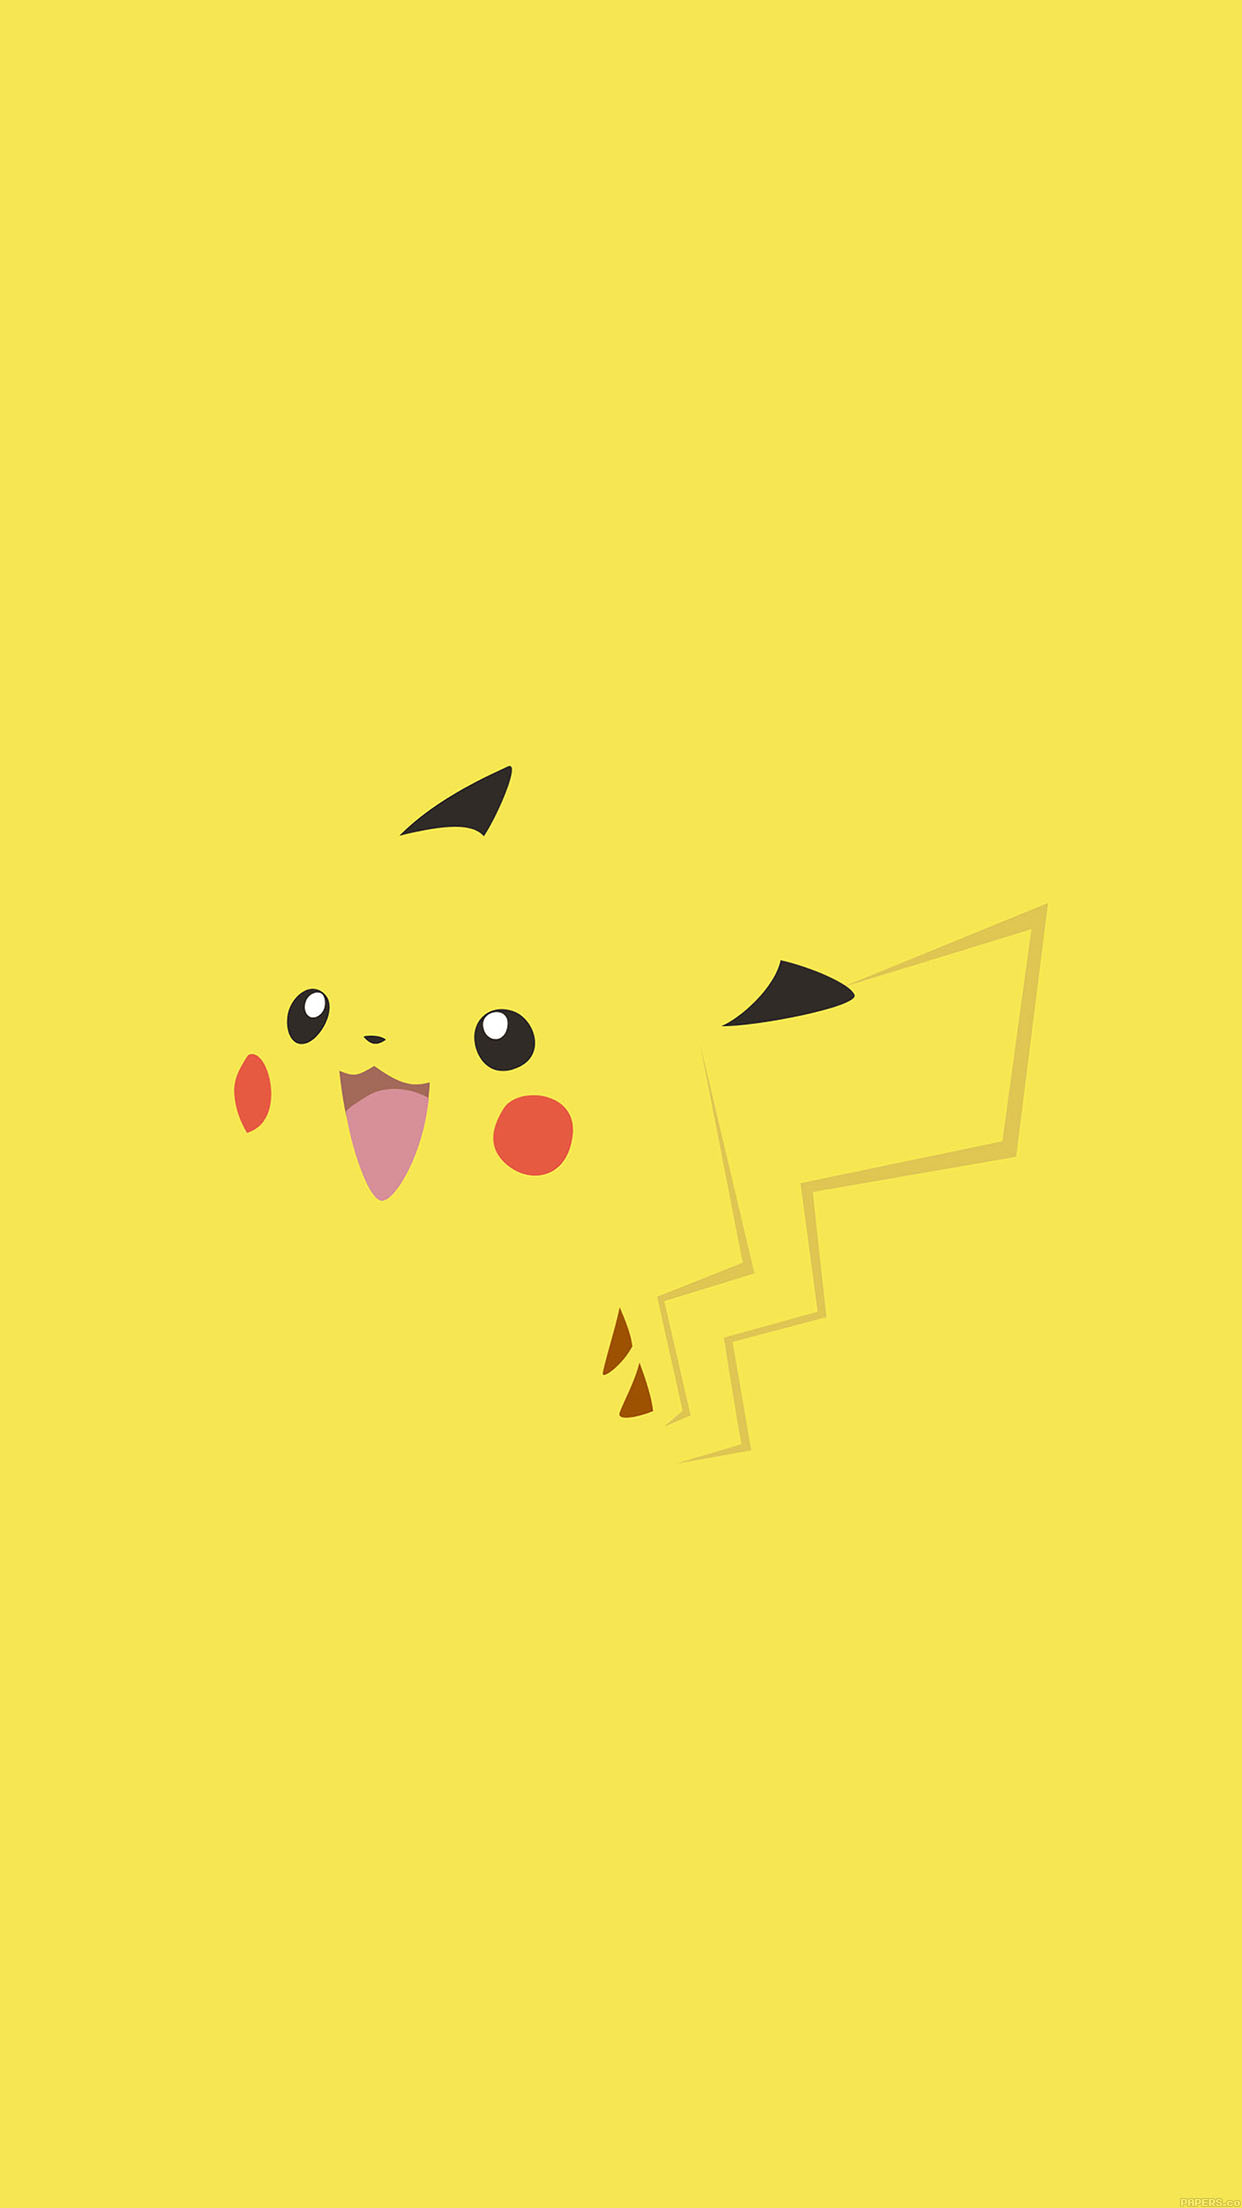 Wallpaper Pikachu Yellow Anime Android wallpaper